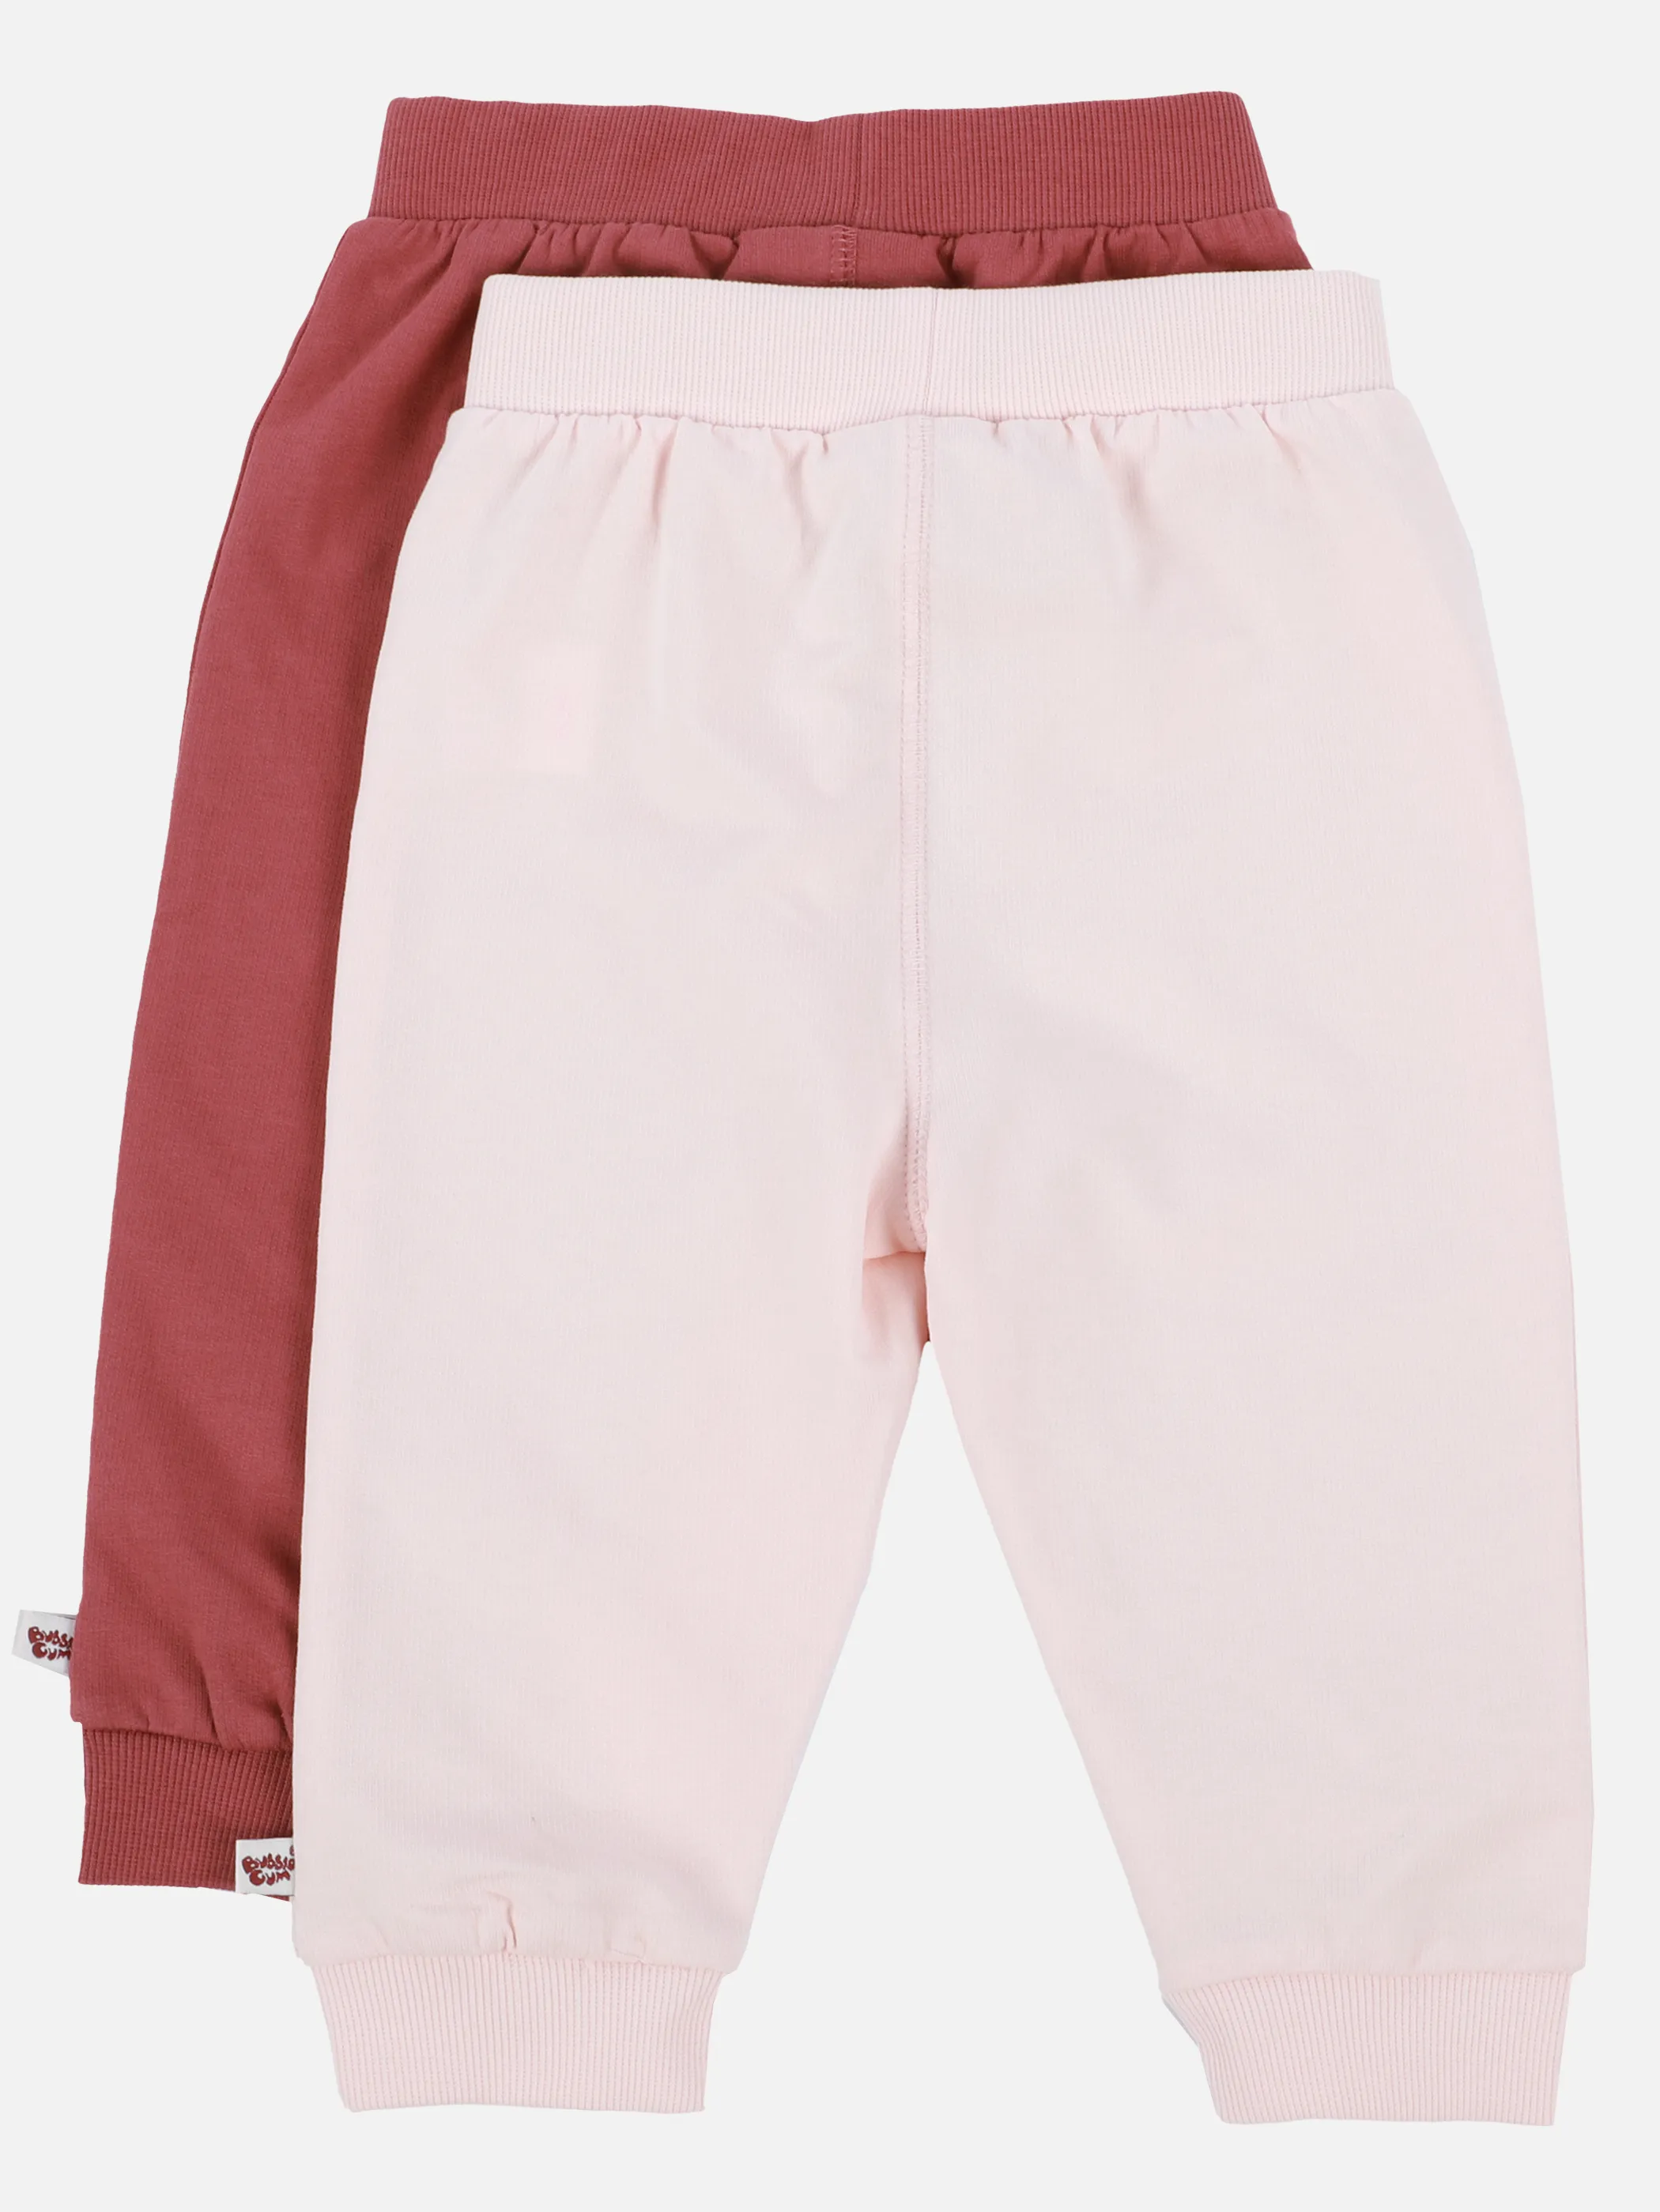 Bubble Gum Baby Mädchen 2er Pack Joggpants in rot und rosa Rosa 898696 ROSA 2